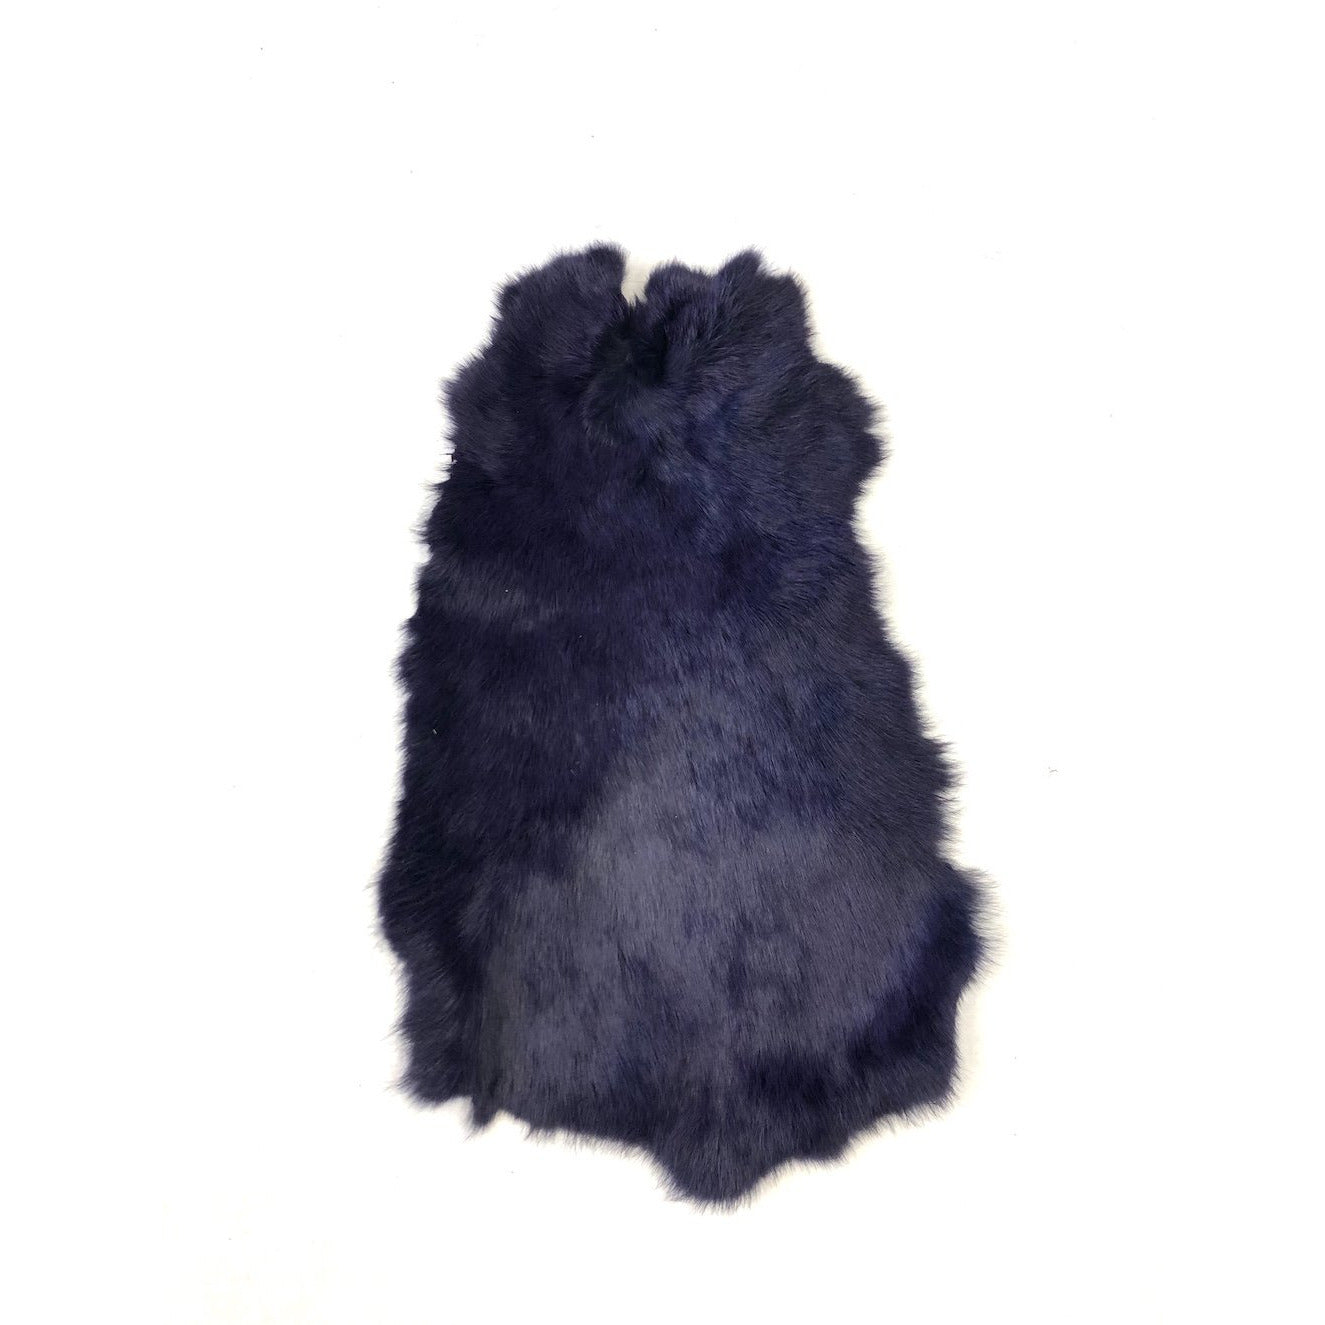 Grass Green Dyed Rabbit Fur Pelt - SL Fur & Leather